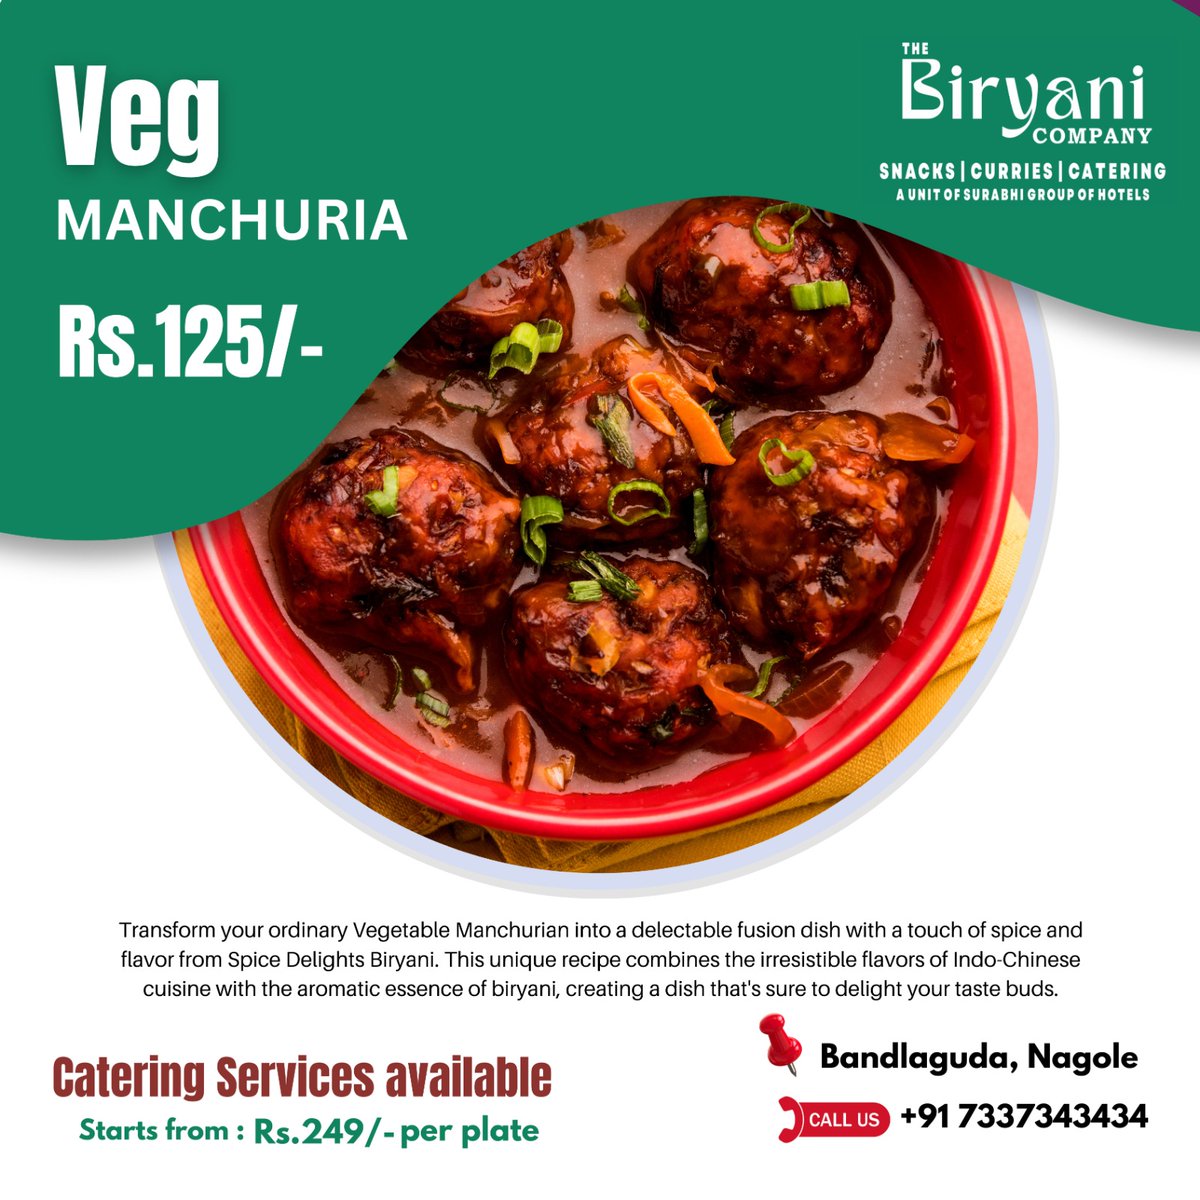 🌱 Satisfy Your Cravings with Veg Manchuria at The Biriyani Company! 🍽️🌟
#thebiriyanicompany #bestcateringservicesatnagole #bestcurrypointatnagole #bestfoodsatnagole #VegManchurian #QuickAndEasyRecipes #FlavorfulBites #FoodieDelights #RecipeMagic #CookingMadeSimple